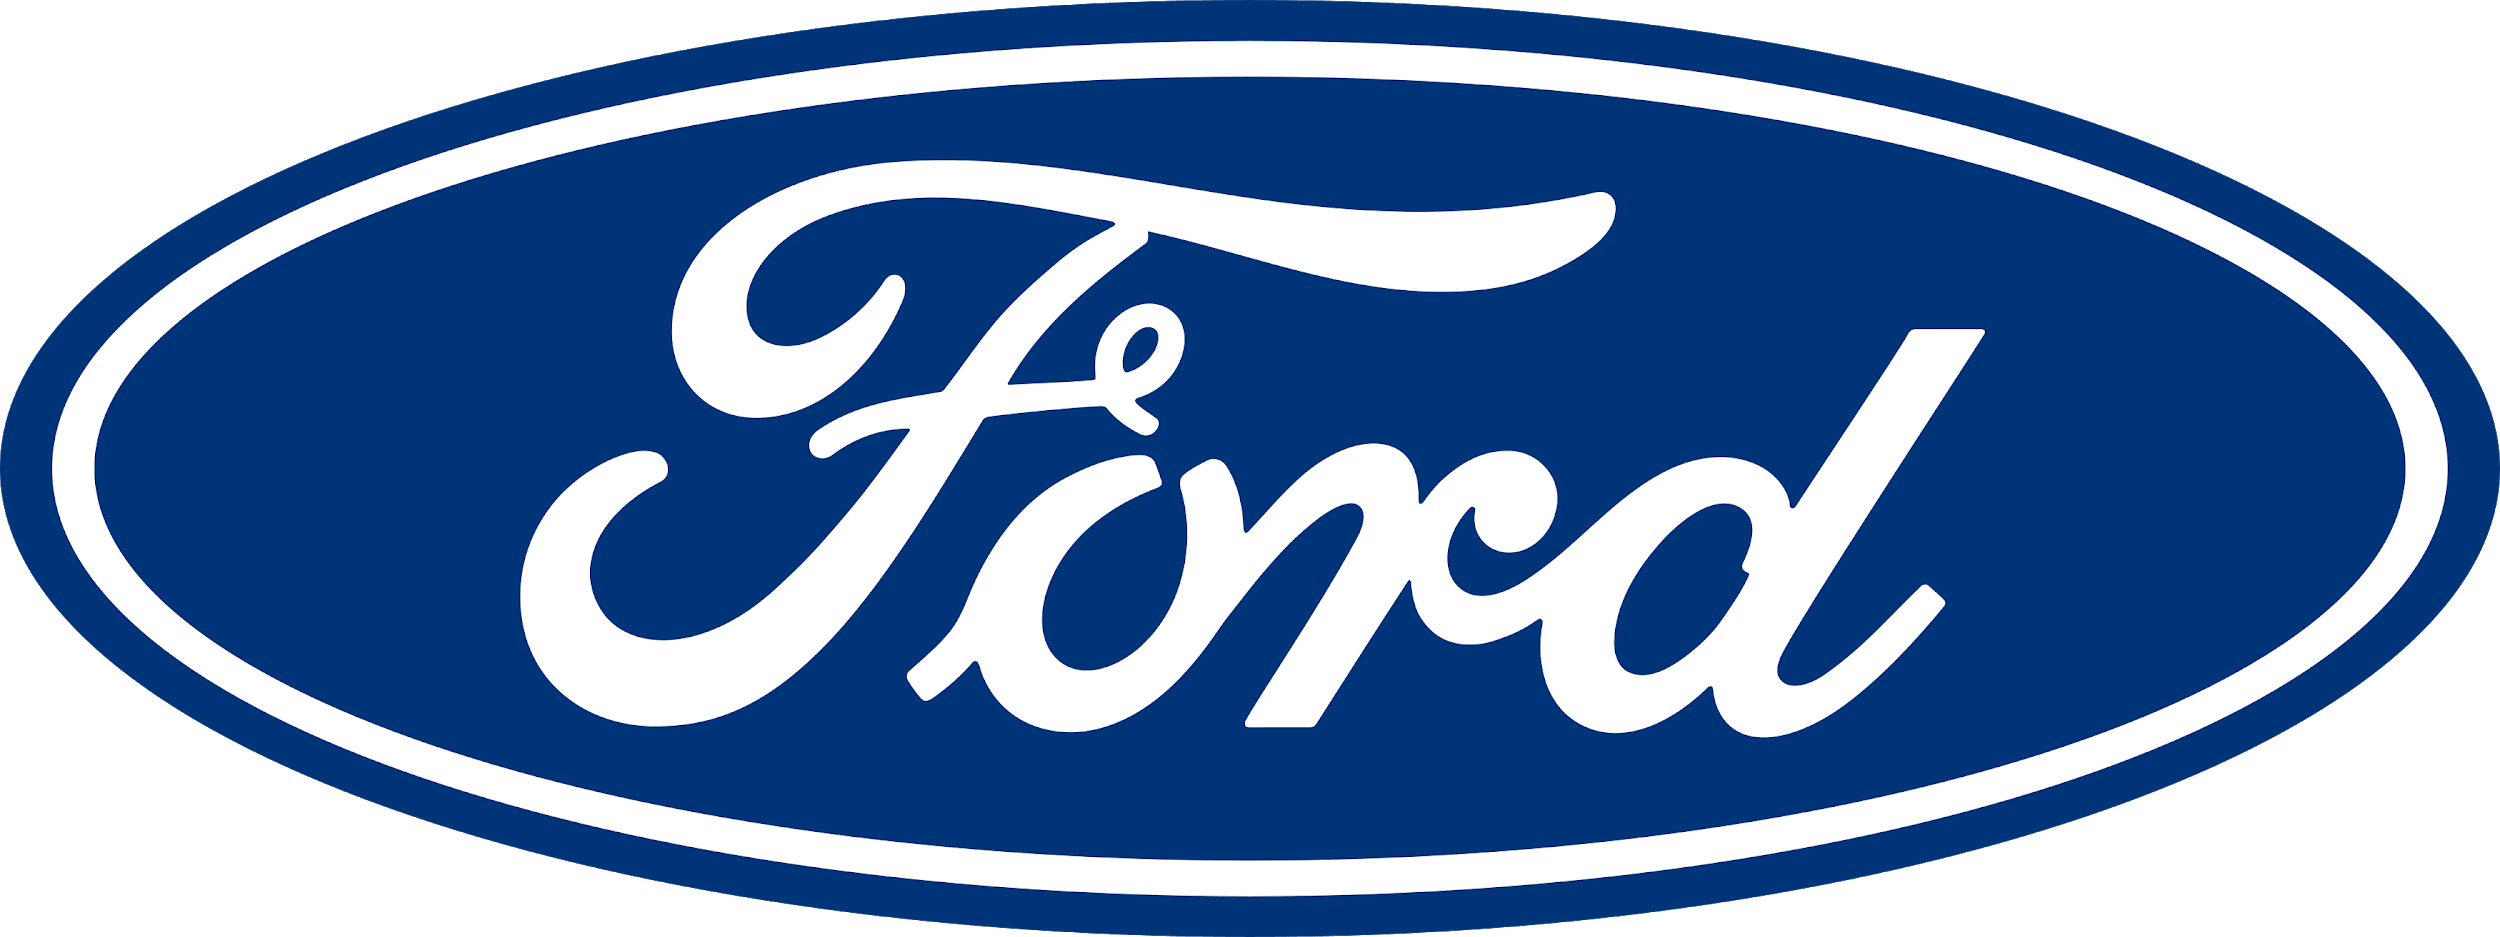 Automotive logo - Ford